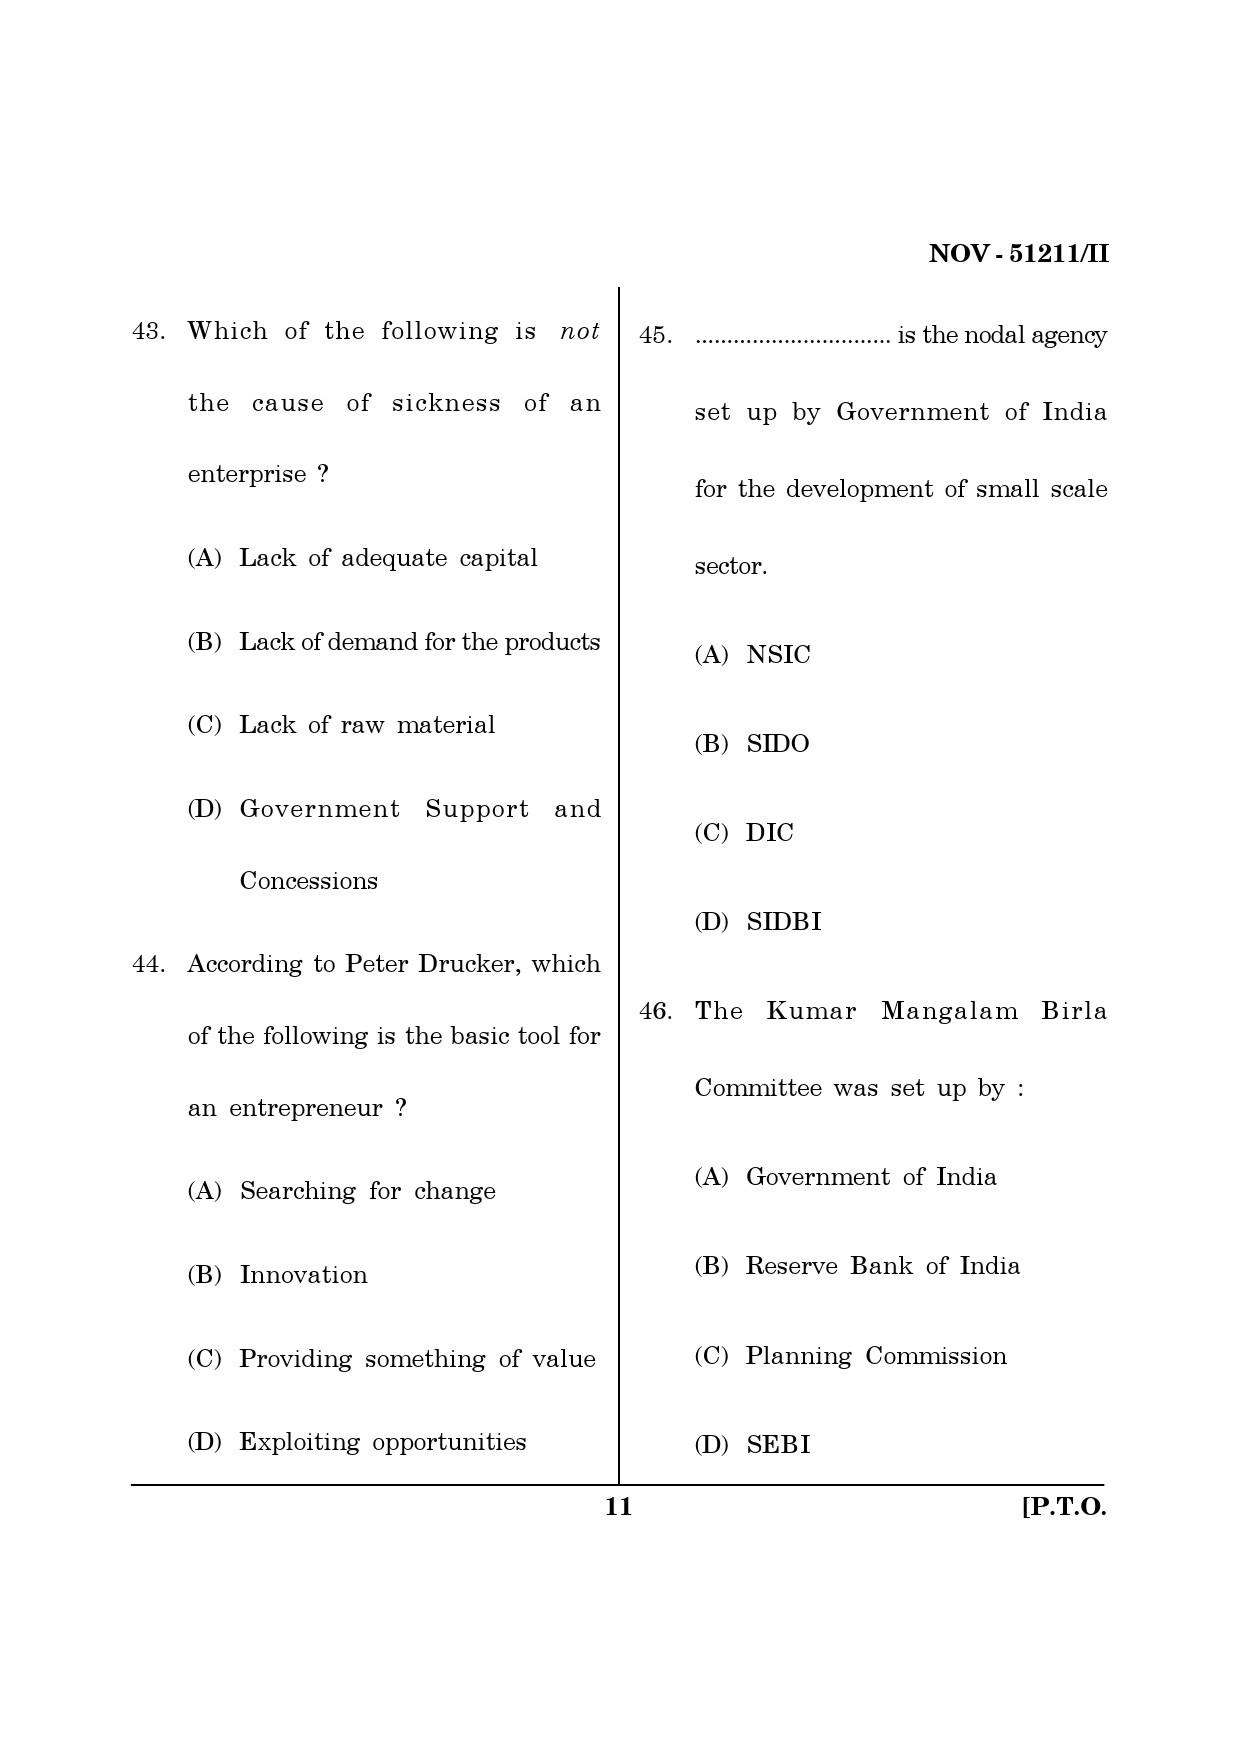 Maharashtra SET Management Question Paper II November 2011 11